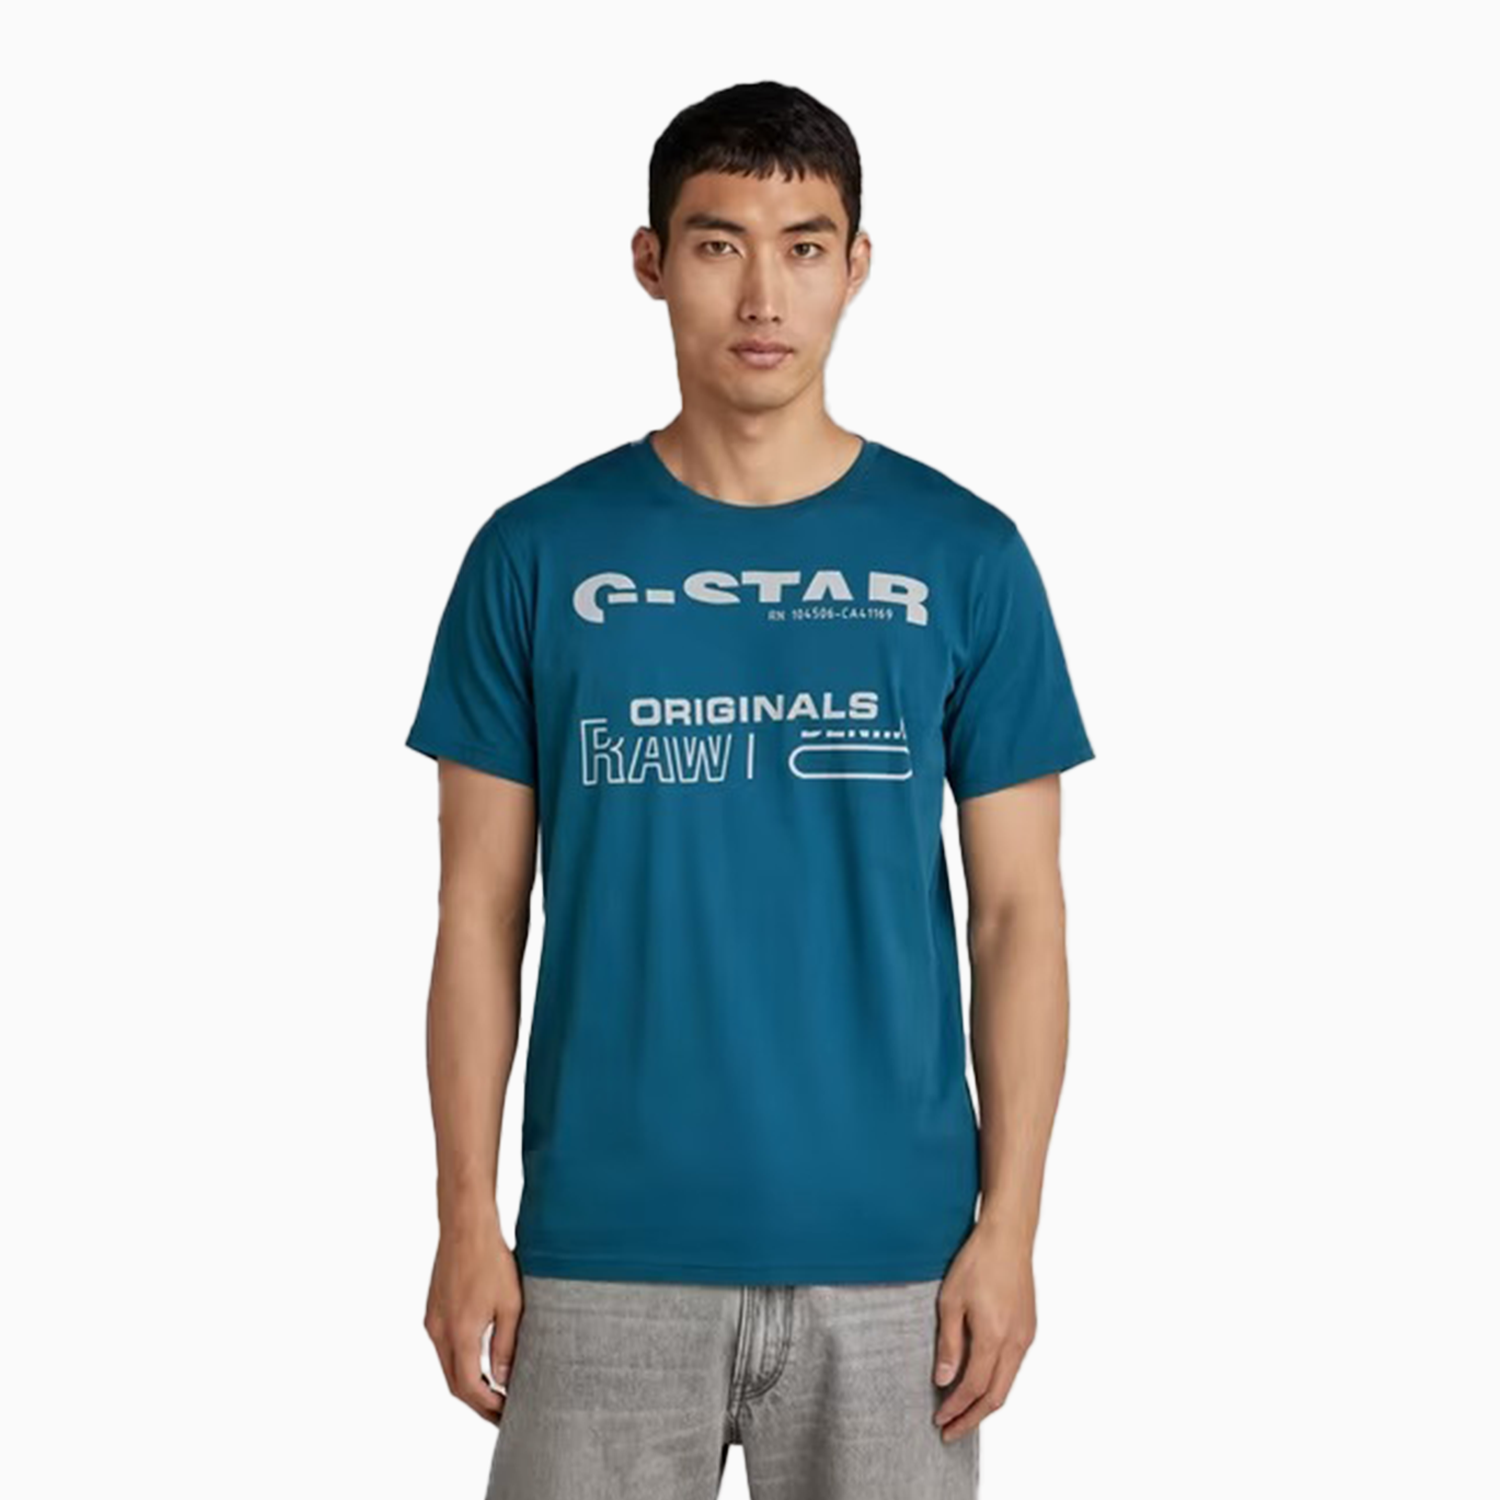 G Star Tee Shirt - Original R T - Nitro